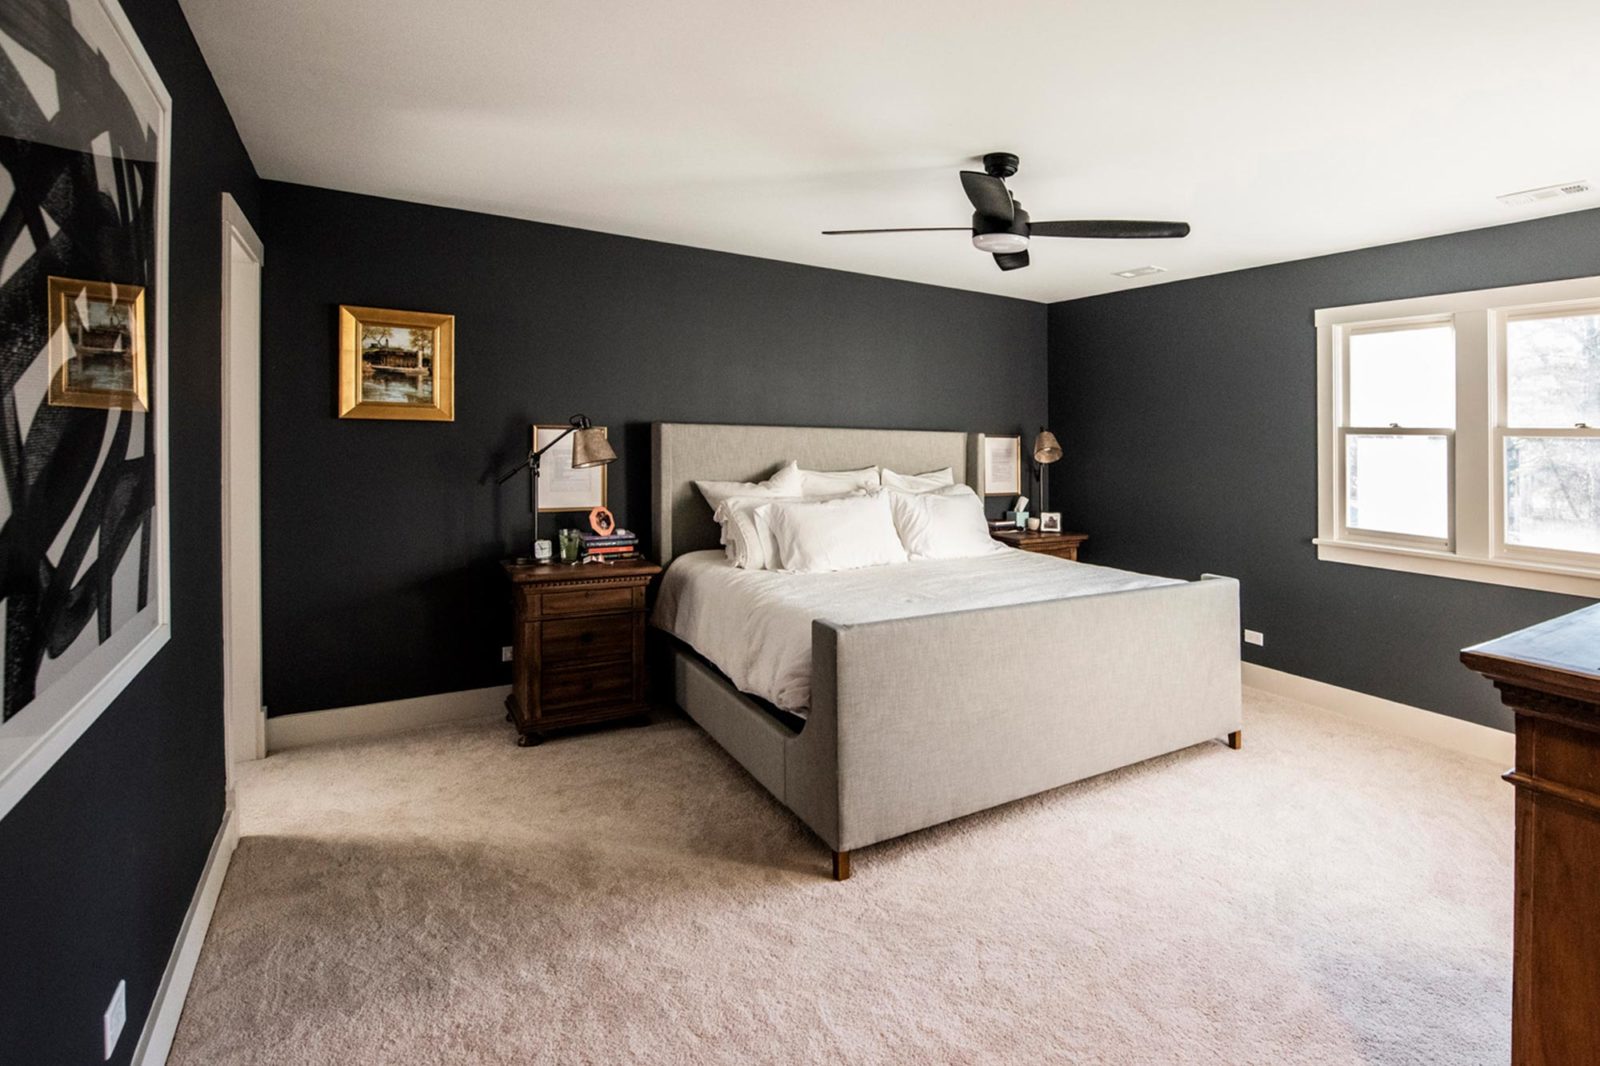 Updated bedroom with dark walls & light-toned bed linens, bedframe, & carpet